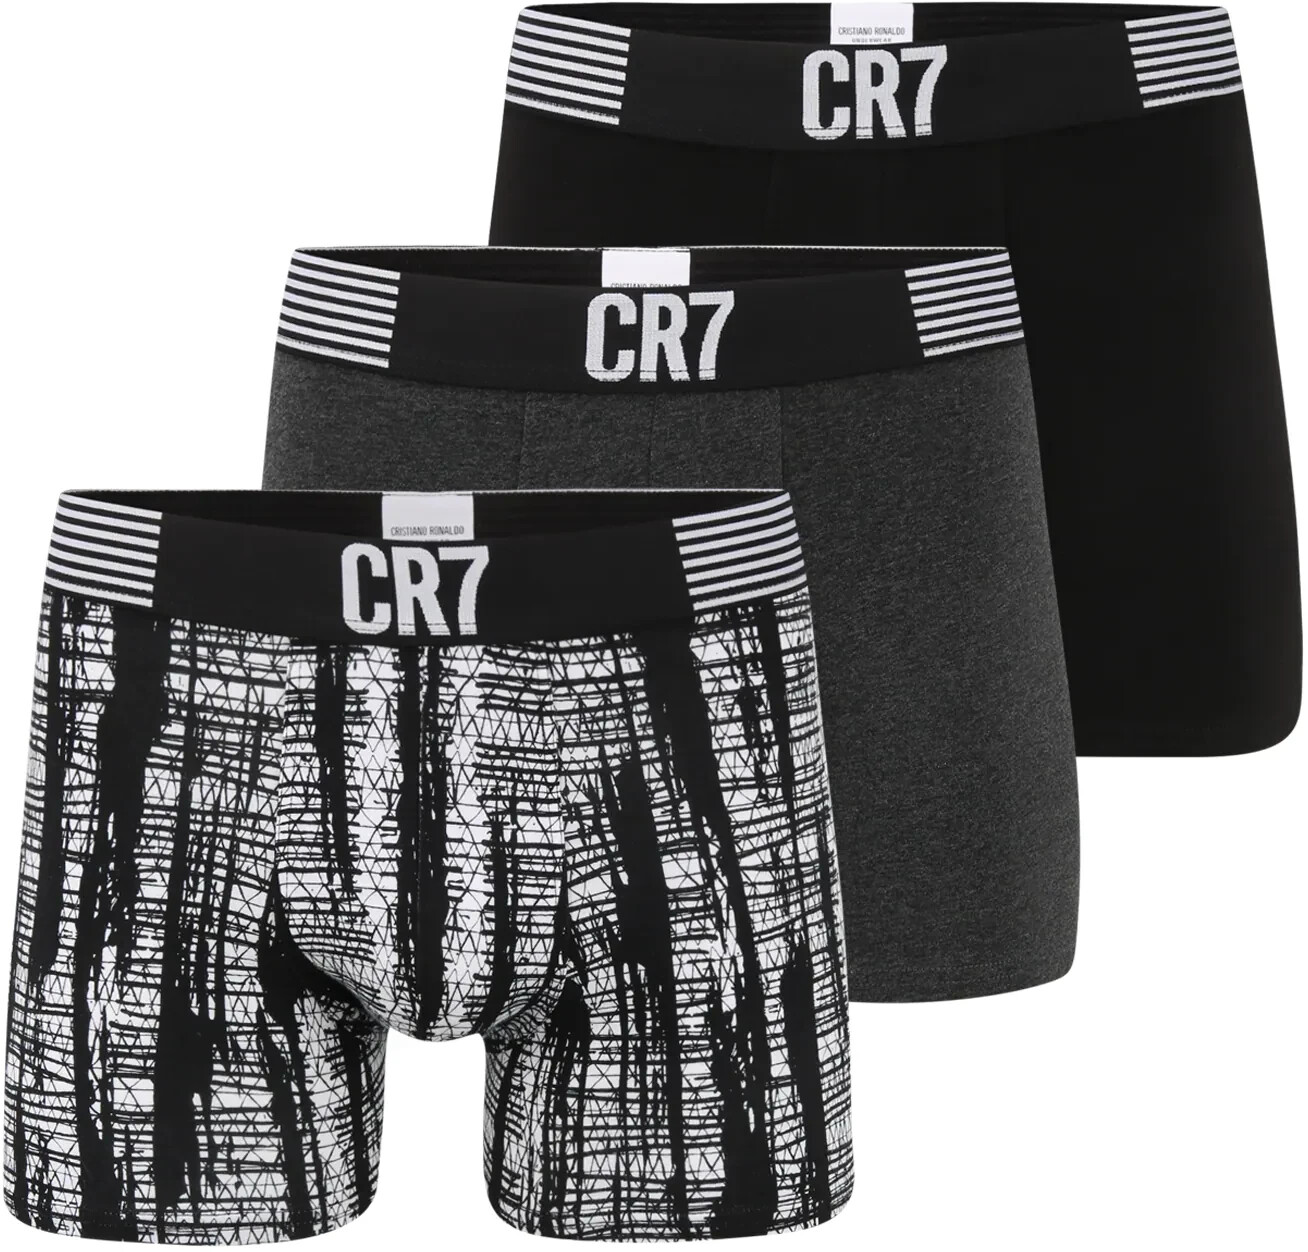 5 pack Cristiano Ronaldo CR7 Mens Cotton Underwear Trunks S-2XL